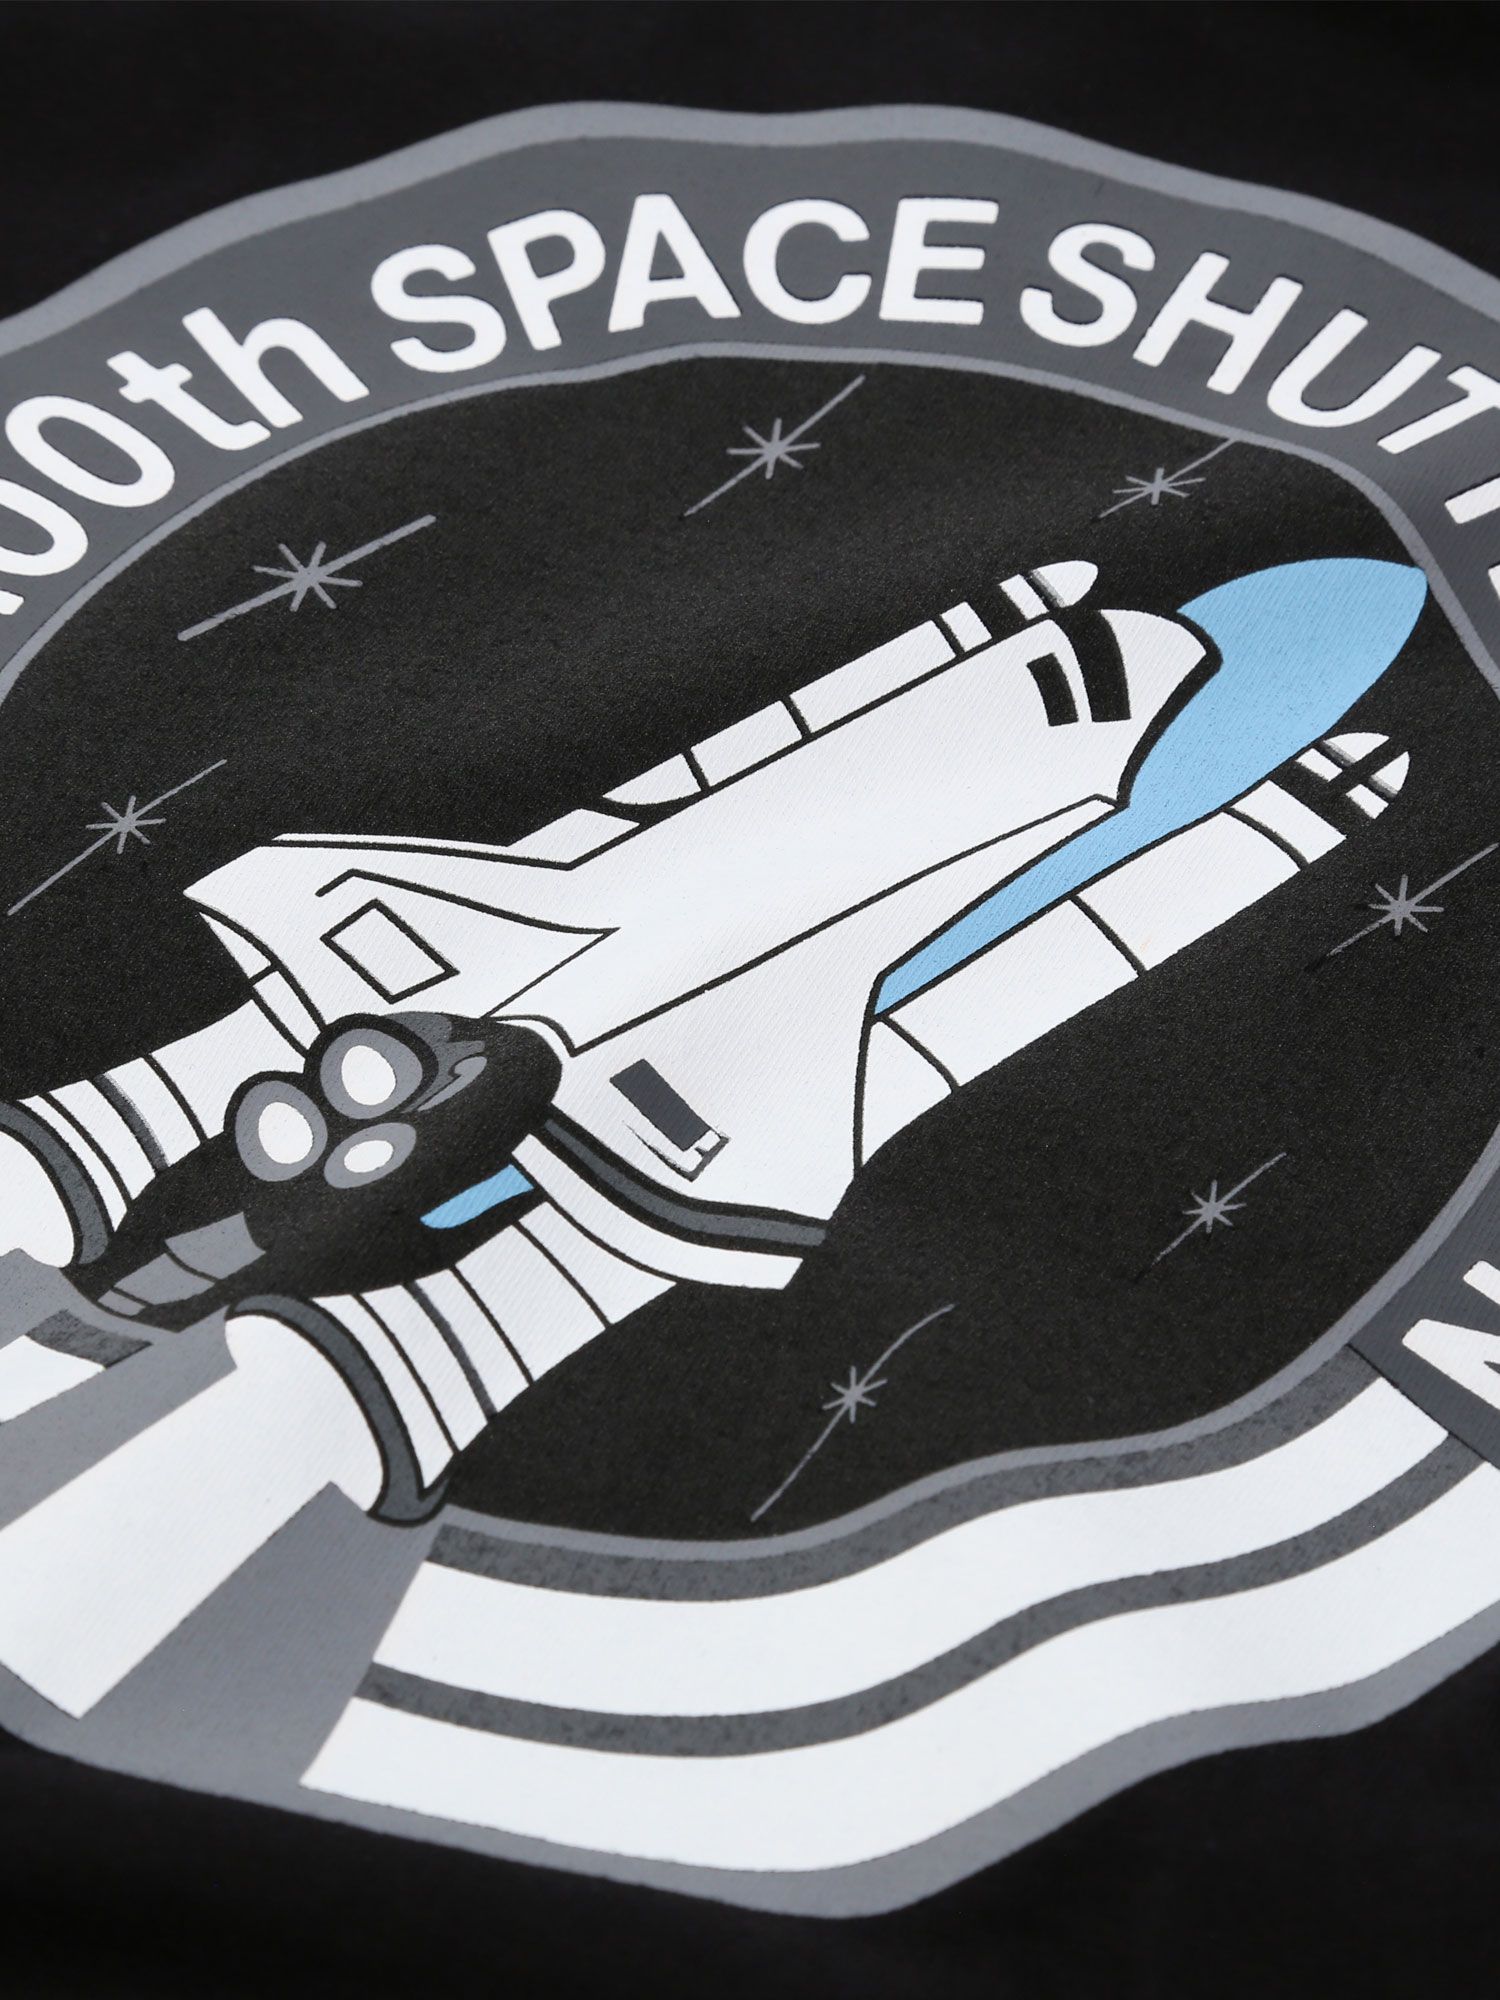 Cotton Industries Shuttle at John Alpha Lewis T-Shirt, Partners NASA Space X Black Jersey &